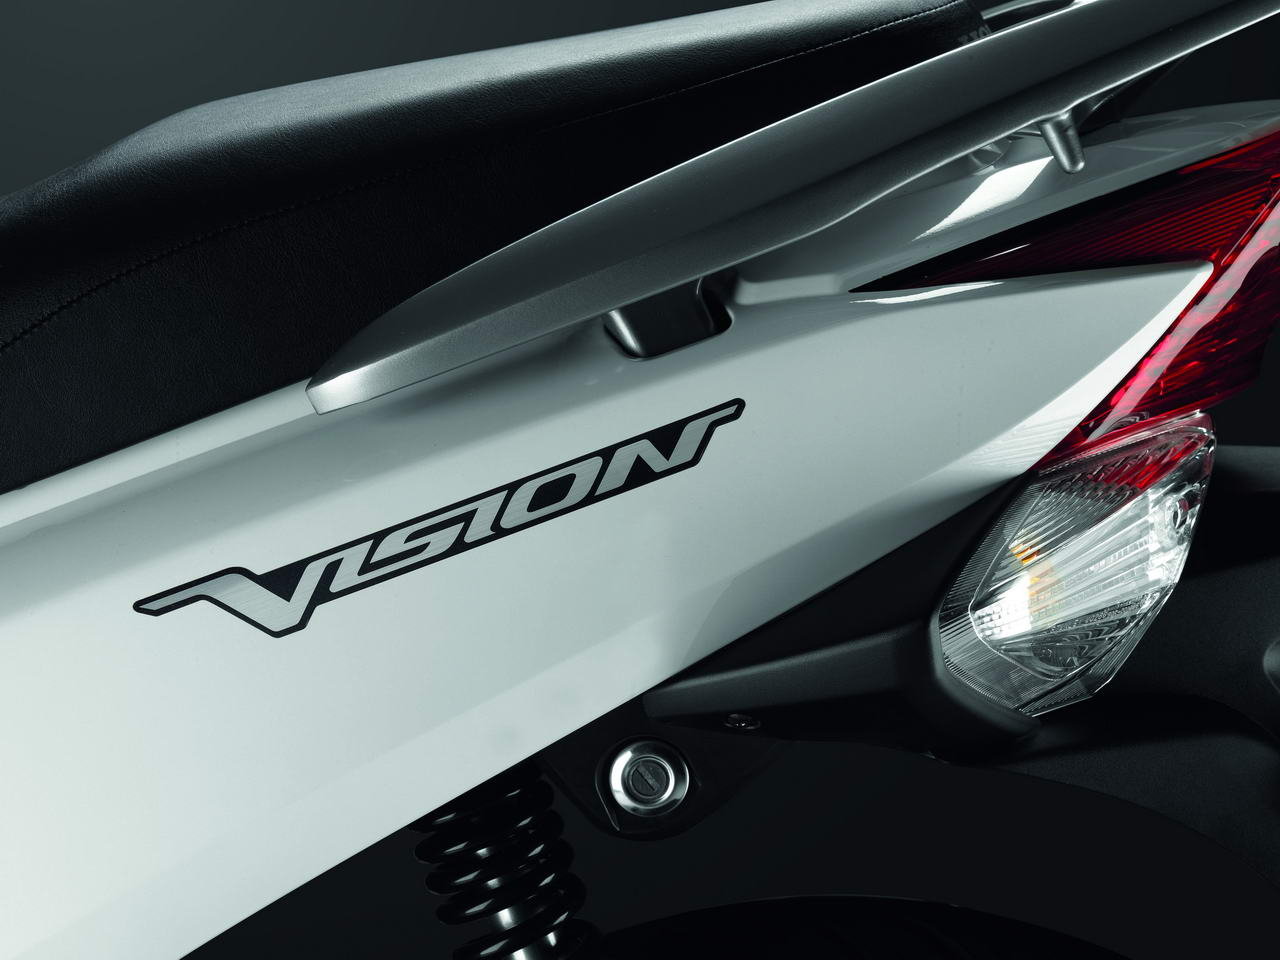 Listino Honda VFR1200F ABS Sport-touring - image 14744_honda-visionbase on https://moto.motori.net